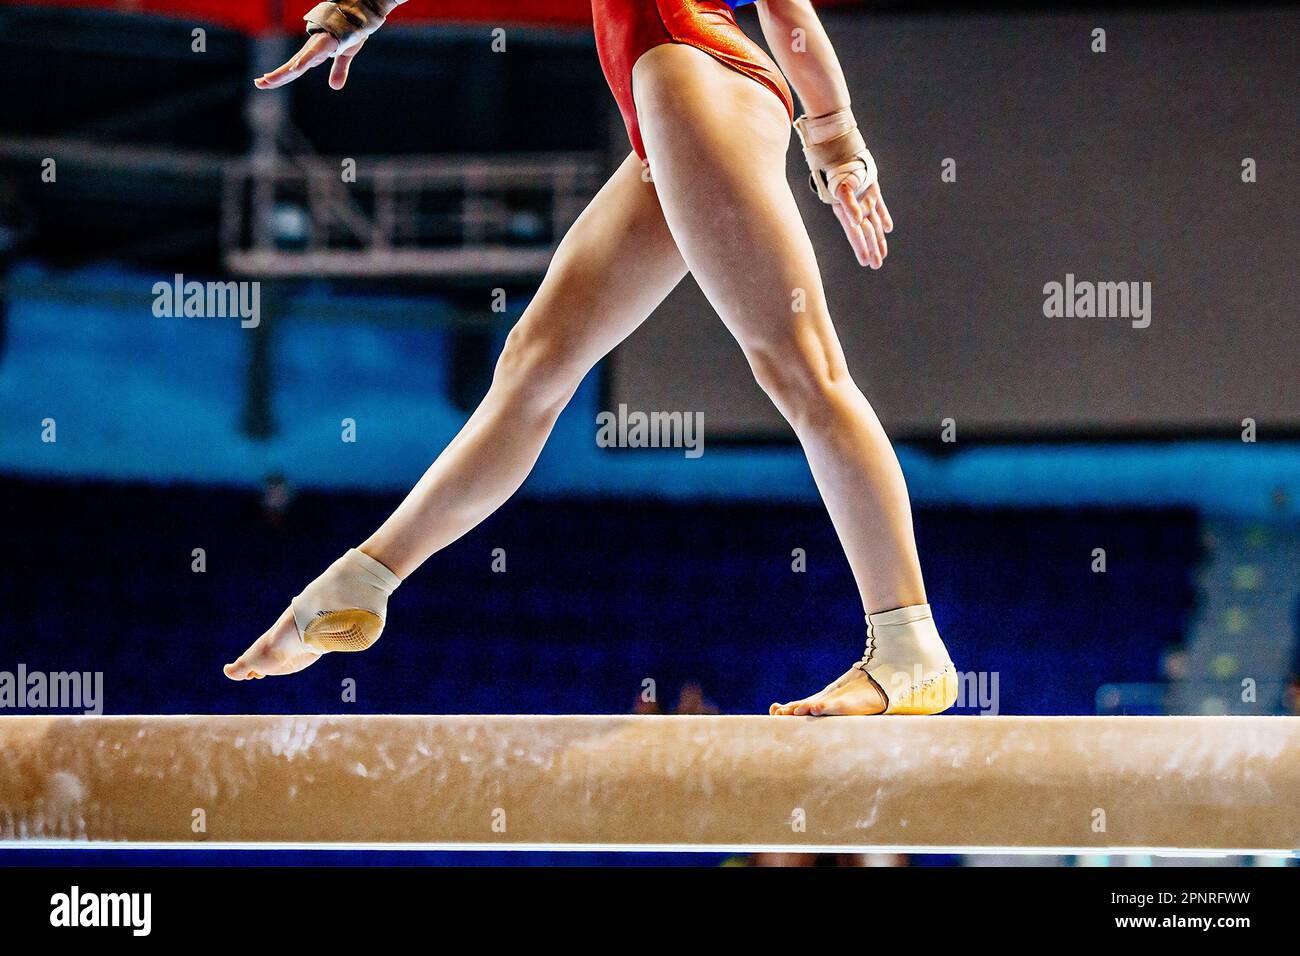 legs female gymnast step on balance beam in gymnastics artistic, sports summer games Stock Photo